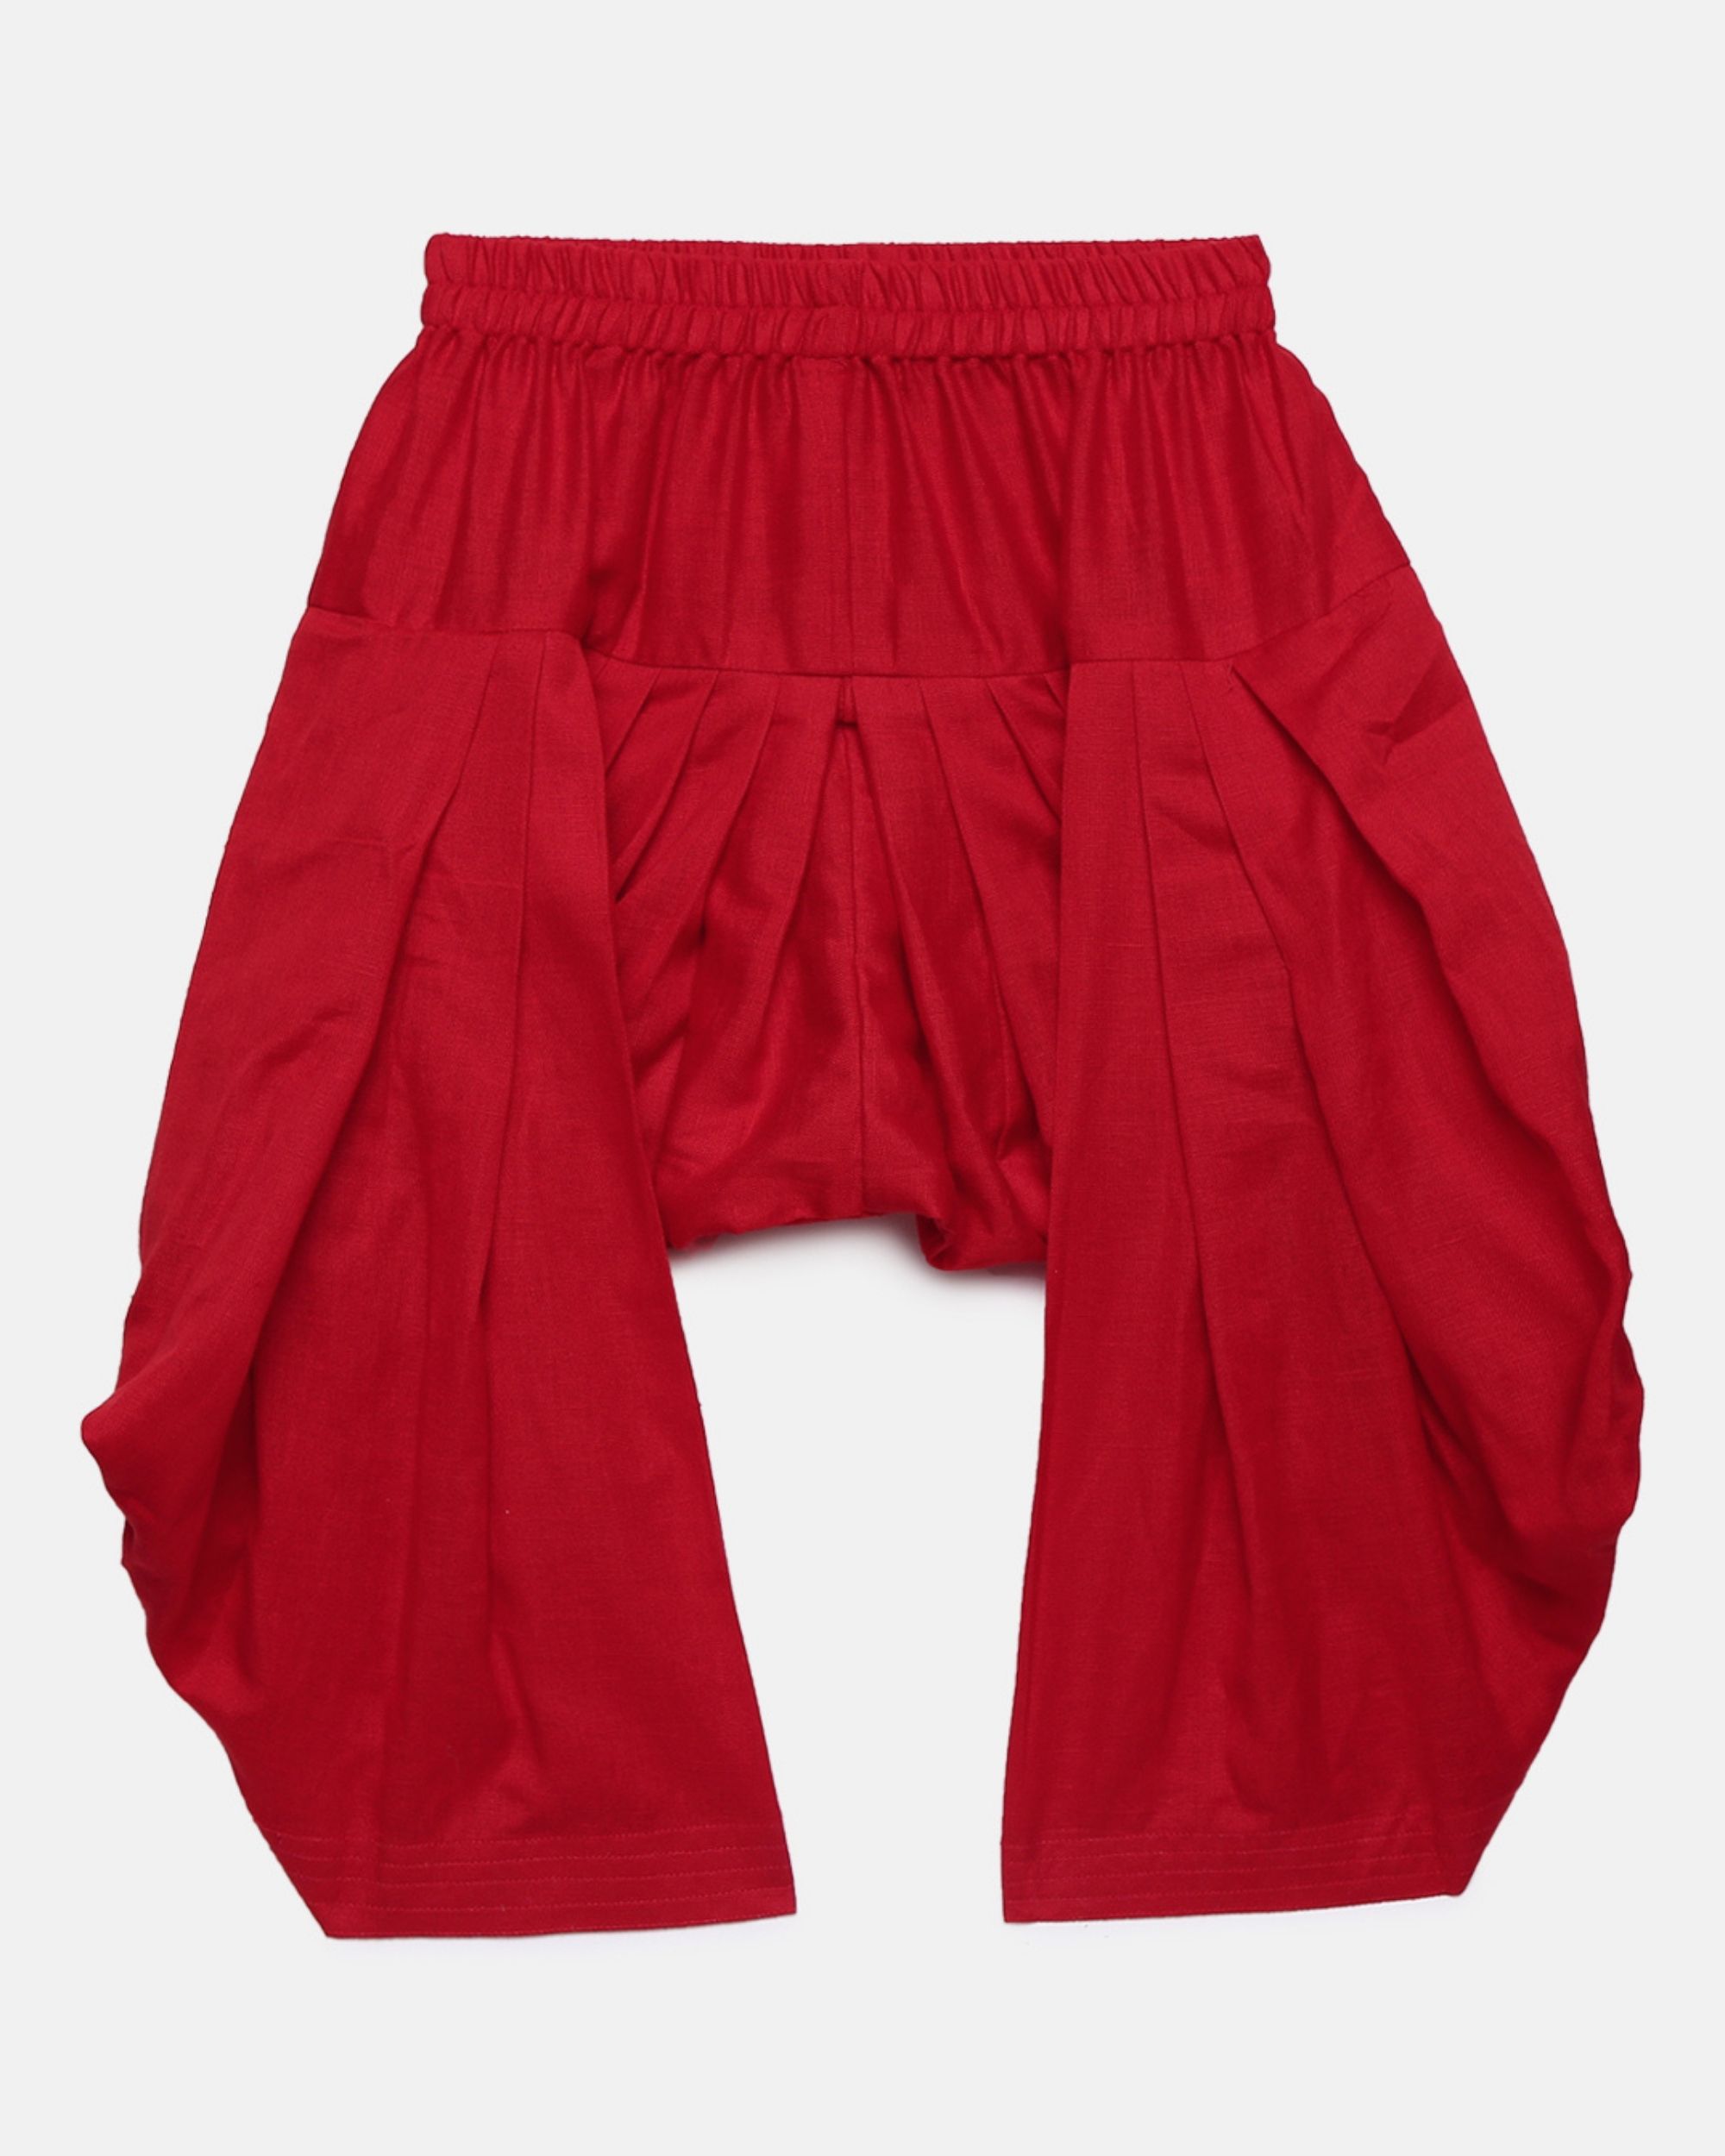 Buy Red Patiala Pants 100% Cotton Shop Online RagaFab